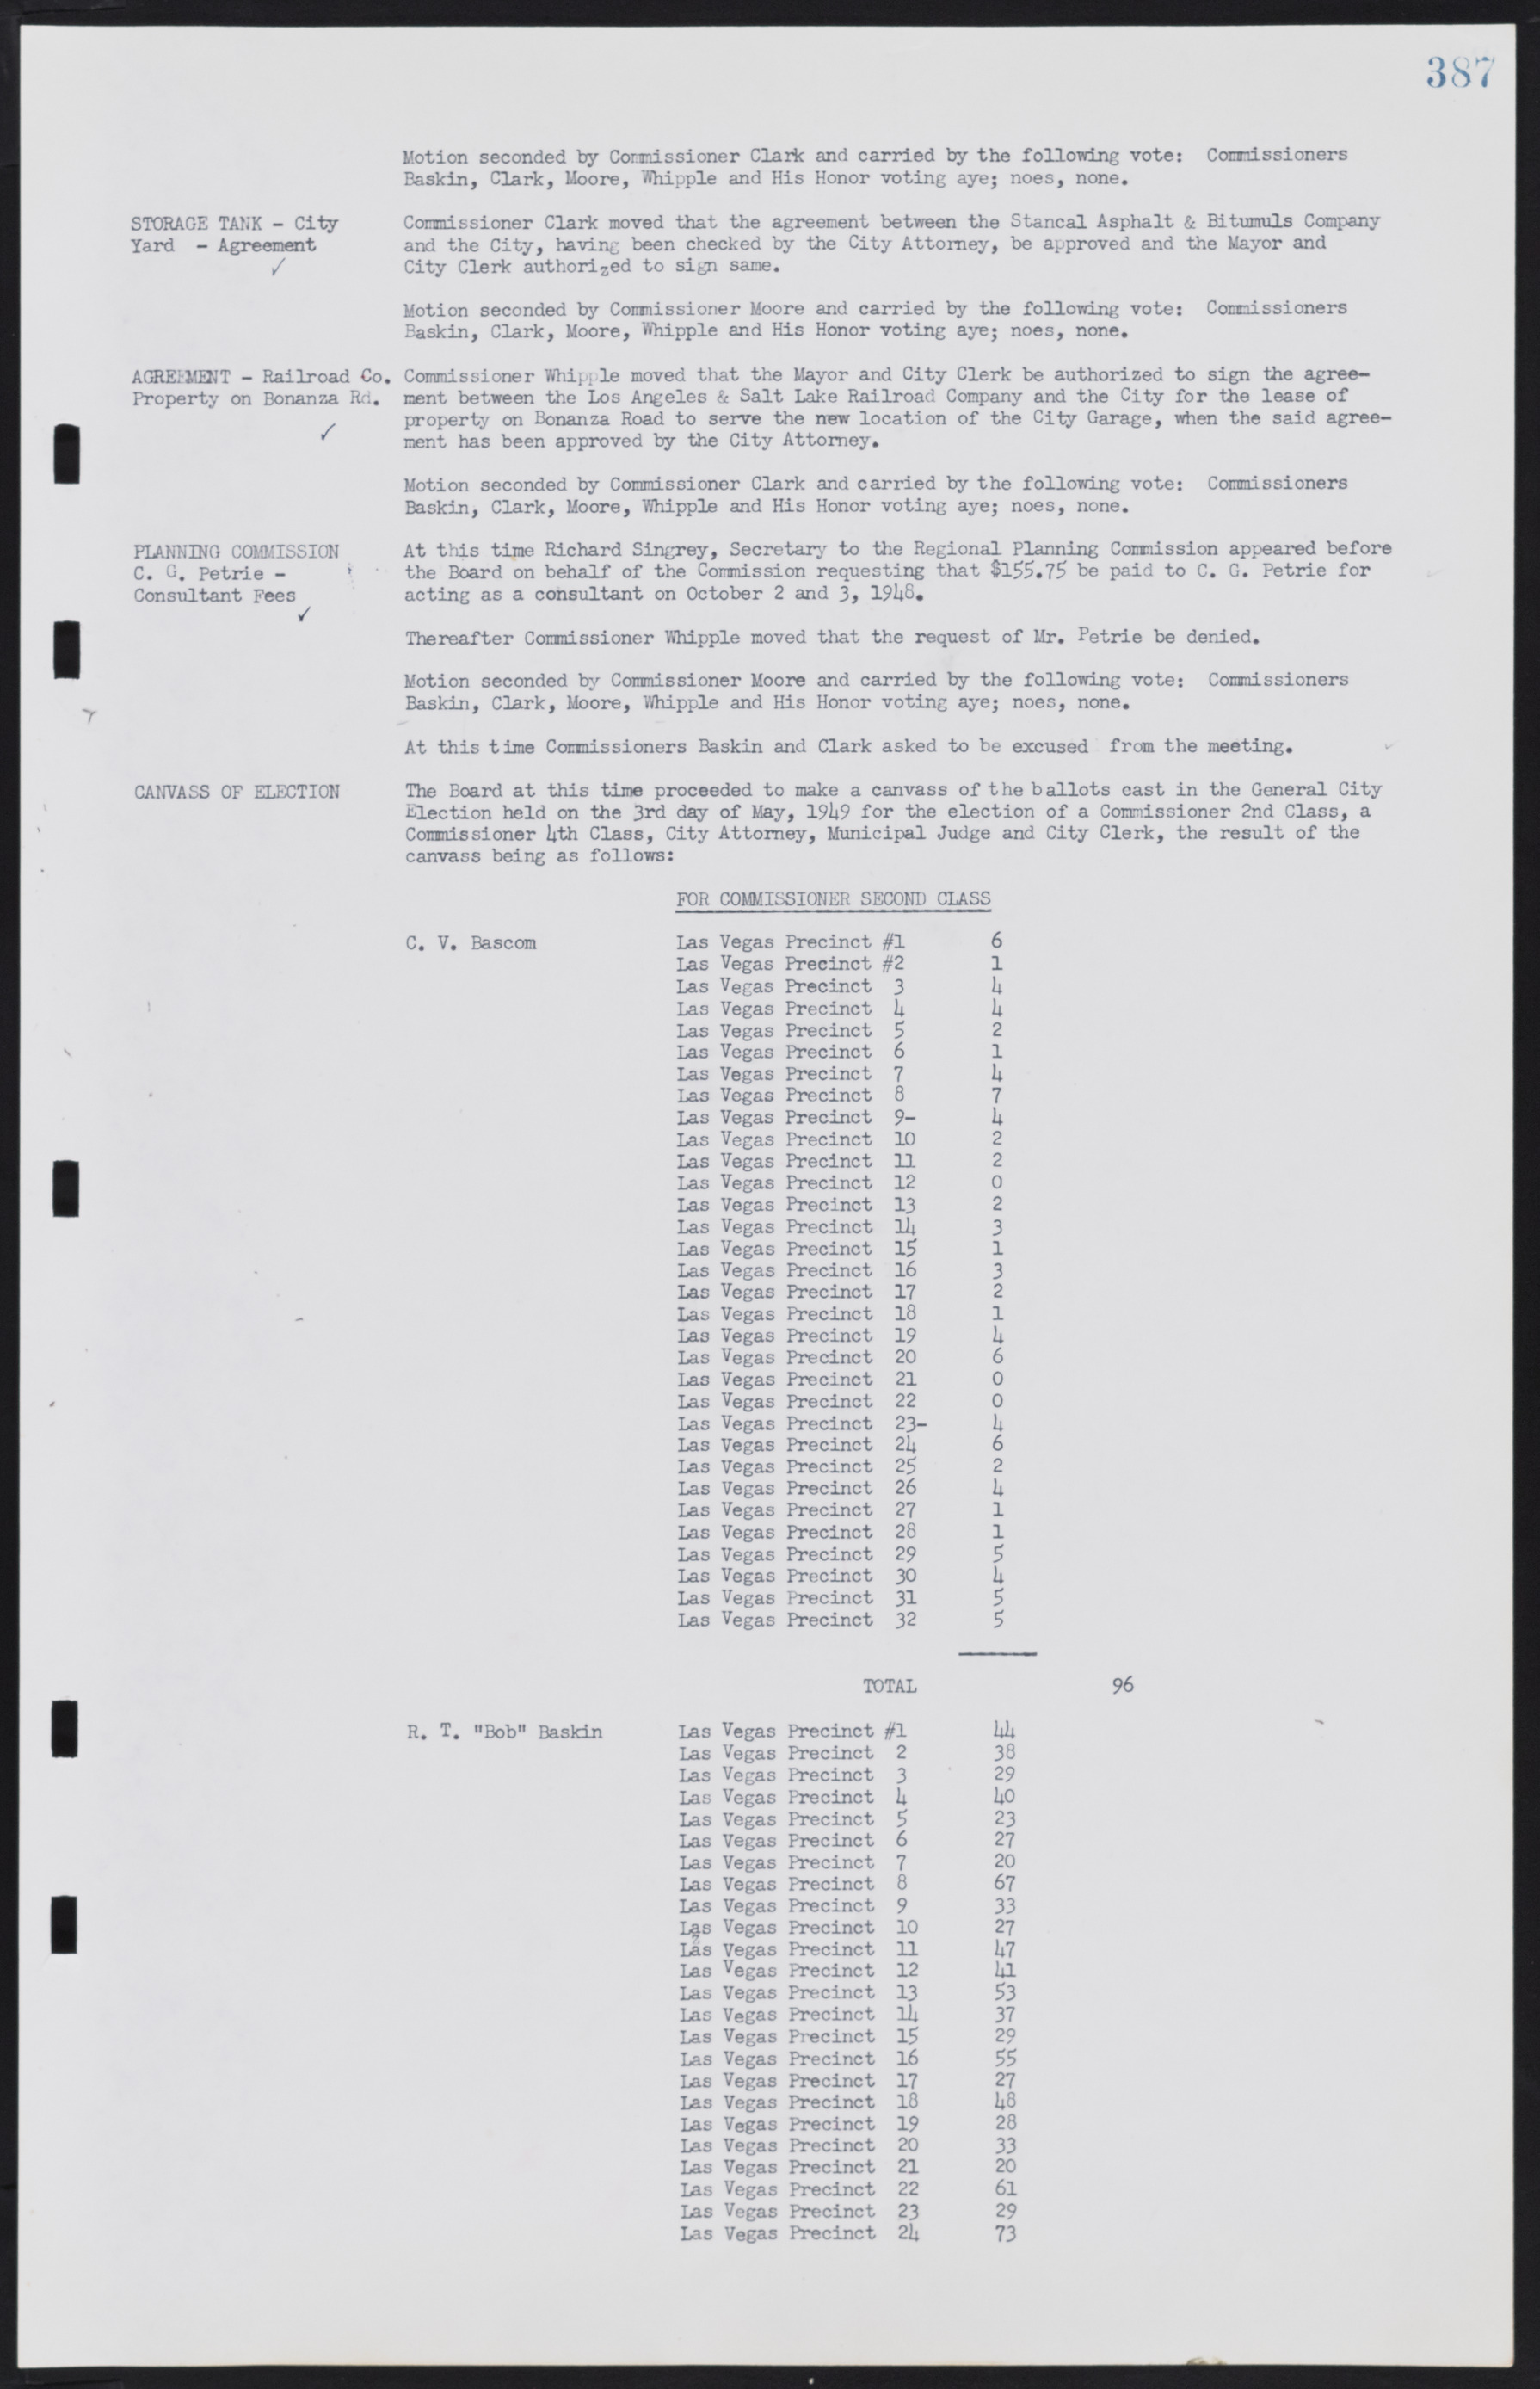 Las Vegas City Commission Minutes, January 7, 1947 to October 26, 1949, lvc000006-417